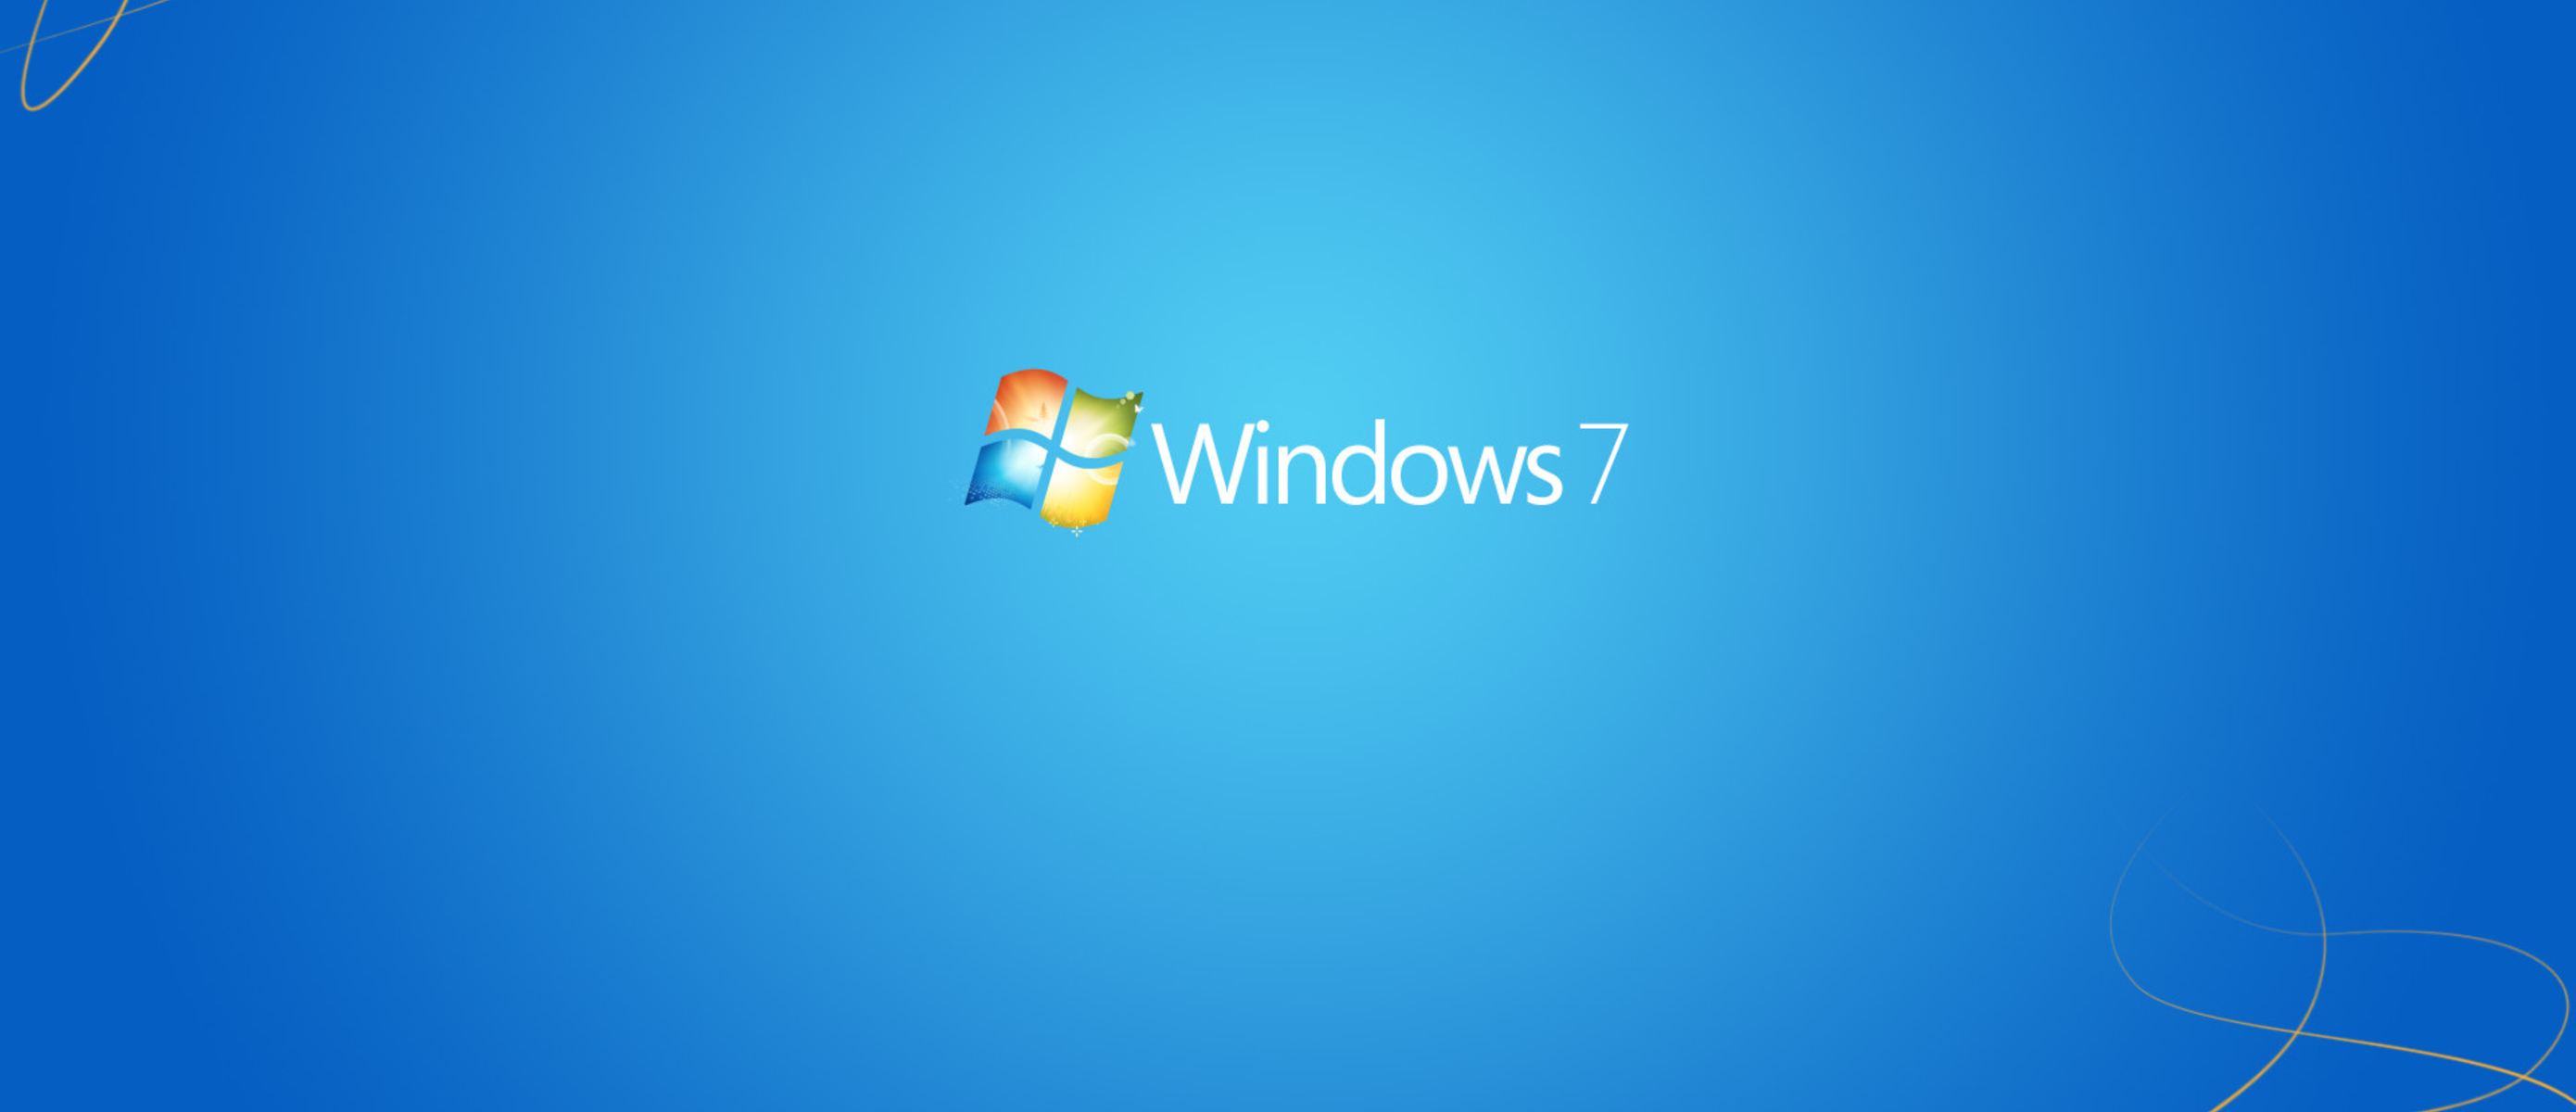 Модель windows 7. Виндовс 7. Обои Windows 7. Windows 7 фото. Windows 7 рабочий стол.